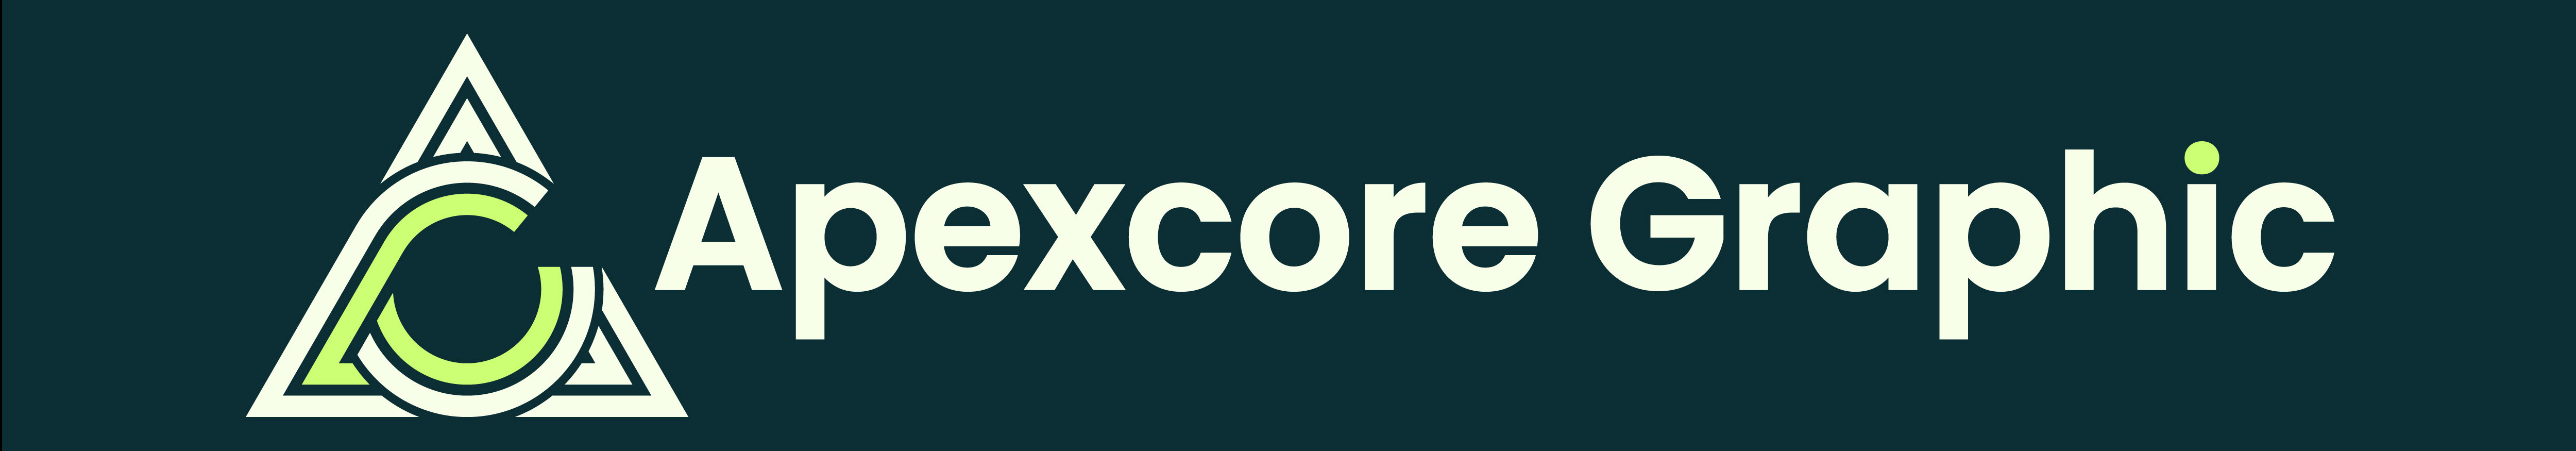 Apexcore Graphic のプロファイルバナー